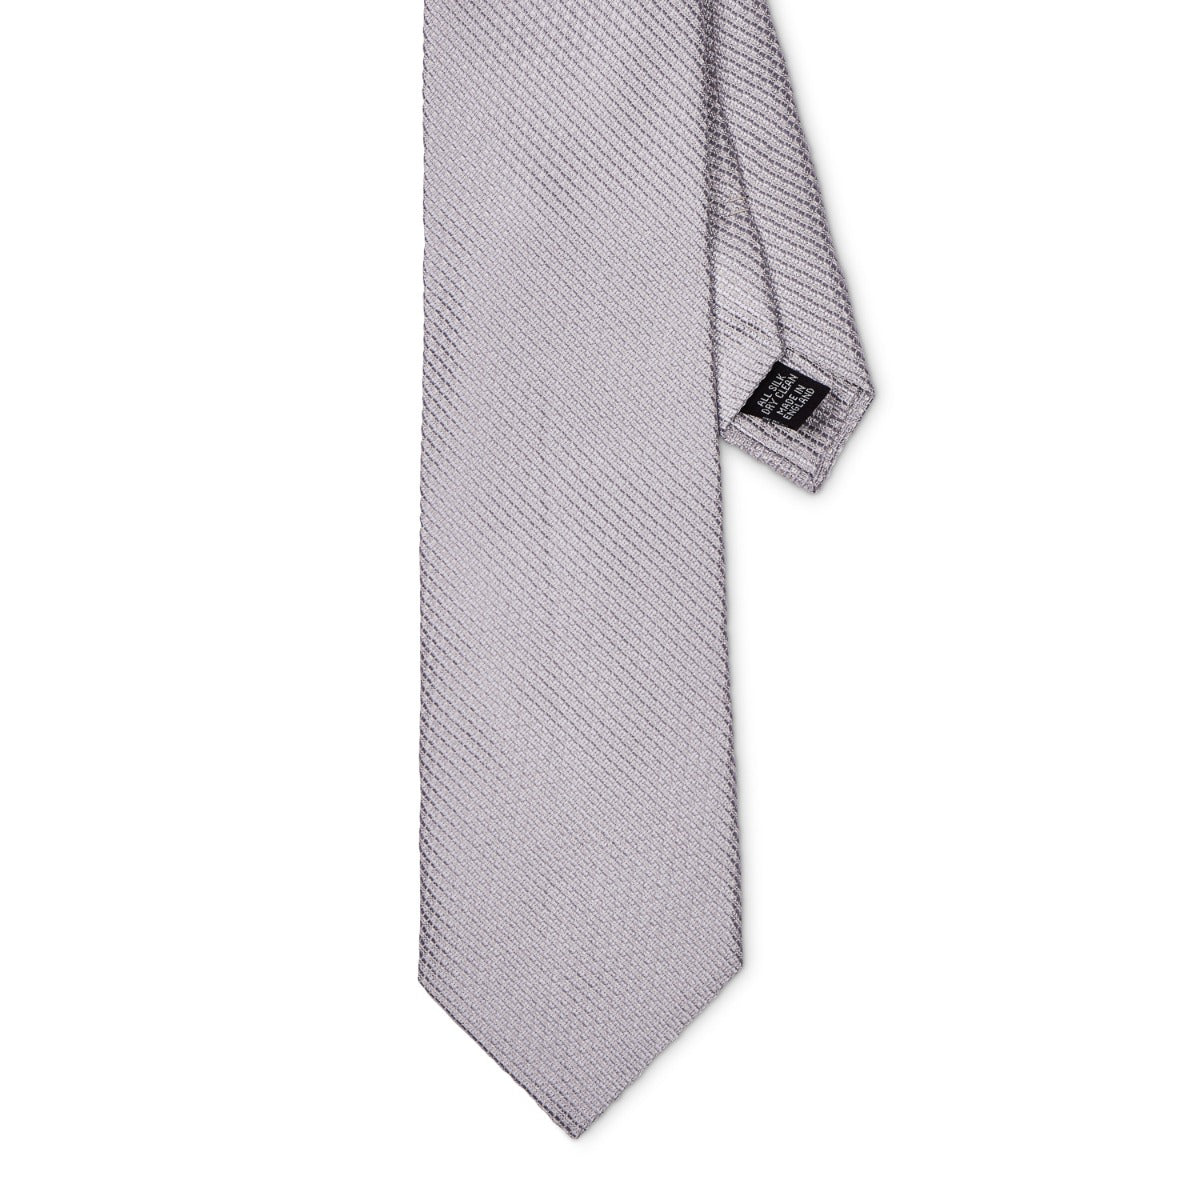 A Sovereign Grade Silver Jacquard Mock Grenadine tie by KirbyAllison.com on a white background.